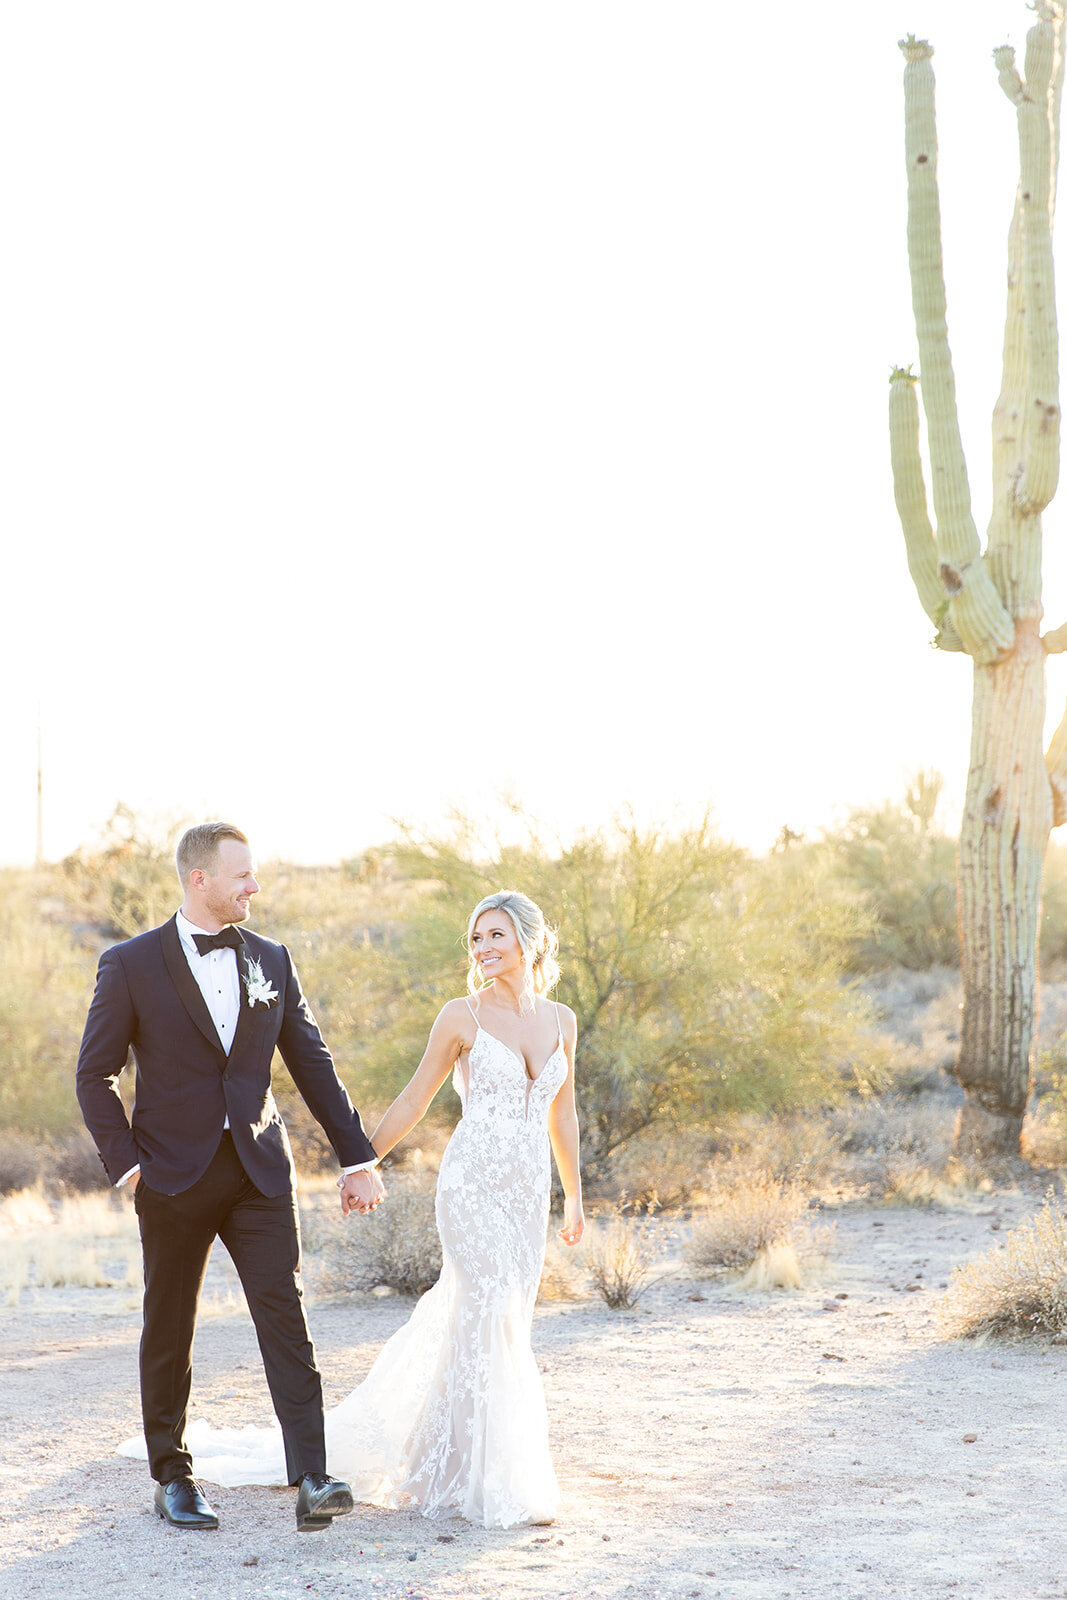 Karlie Colleen Photography - Ashley & Grant Wedding - The Paseo - Phoenix Arizona-798